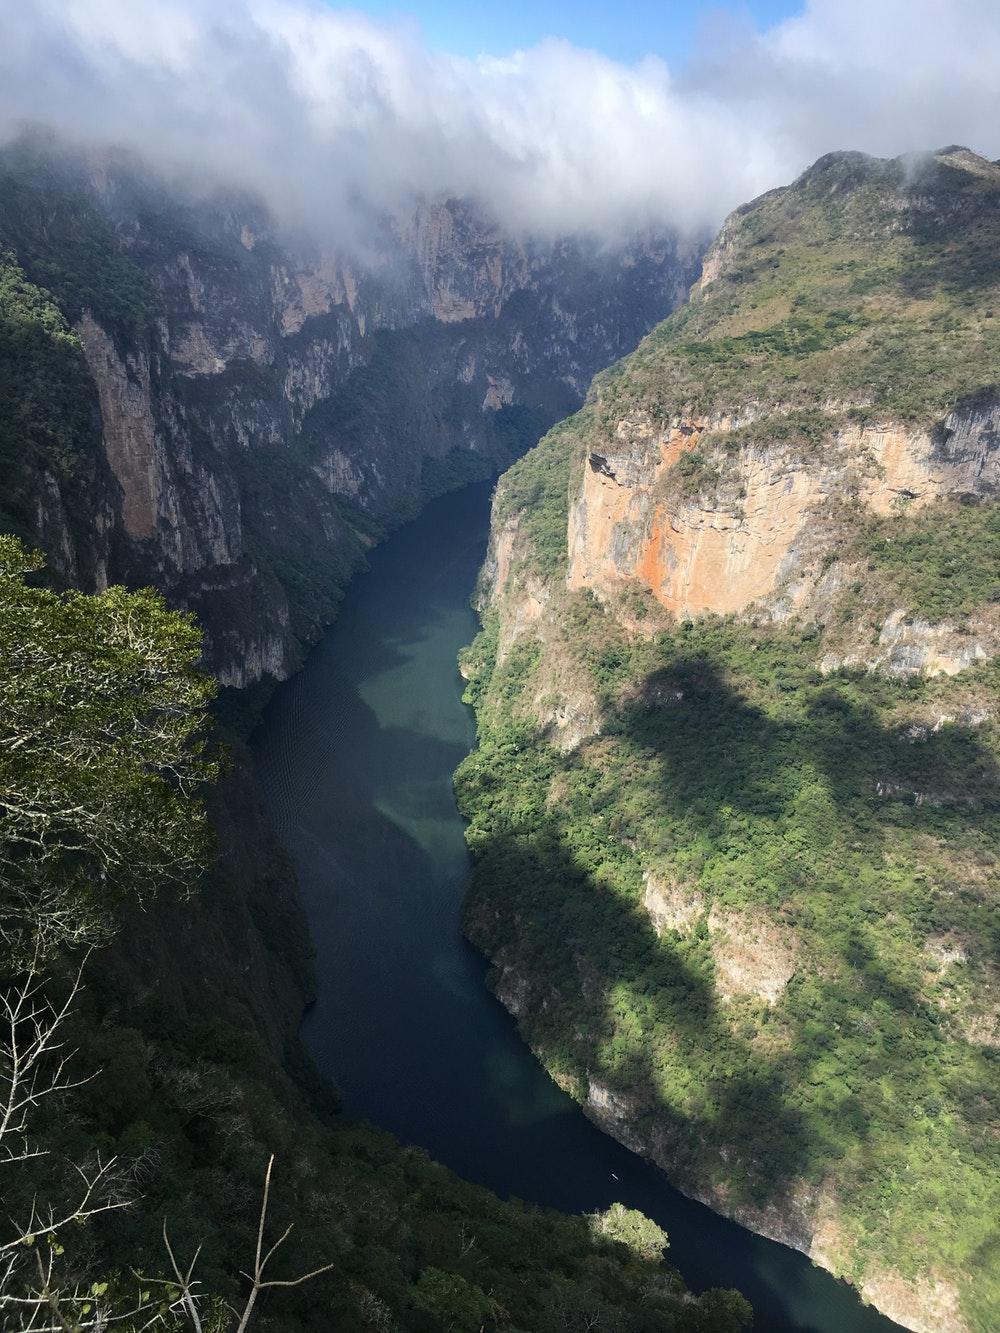 Sumidero Canyon photo by Marian Riquelme